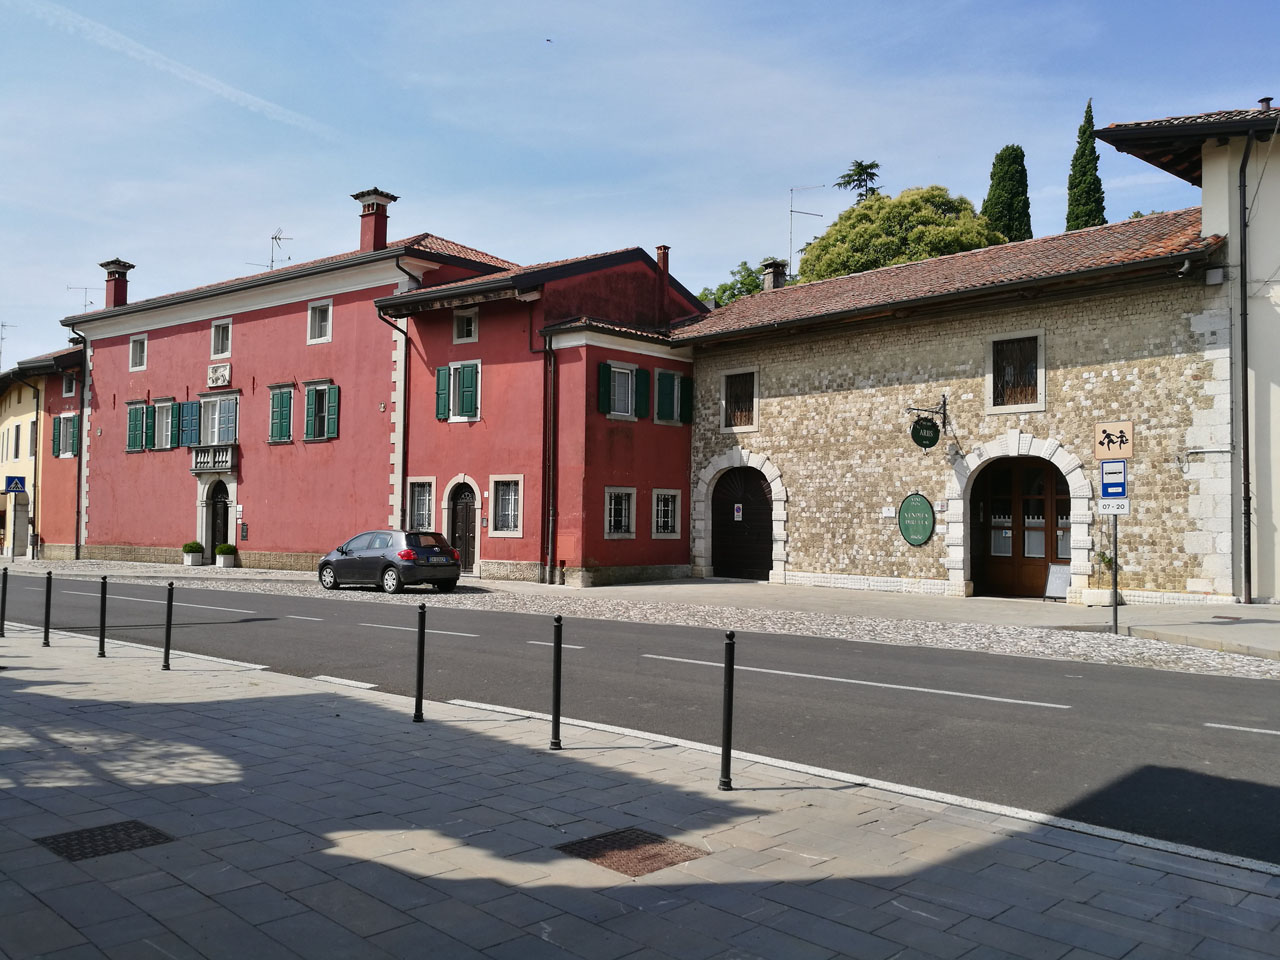 Annessi rustici di Villa Ariis (casa, annessi rustici) - Trivignano Udinese (UD)  (XVIII)